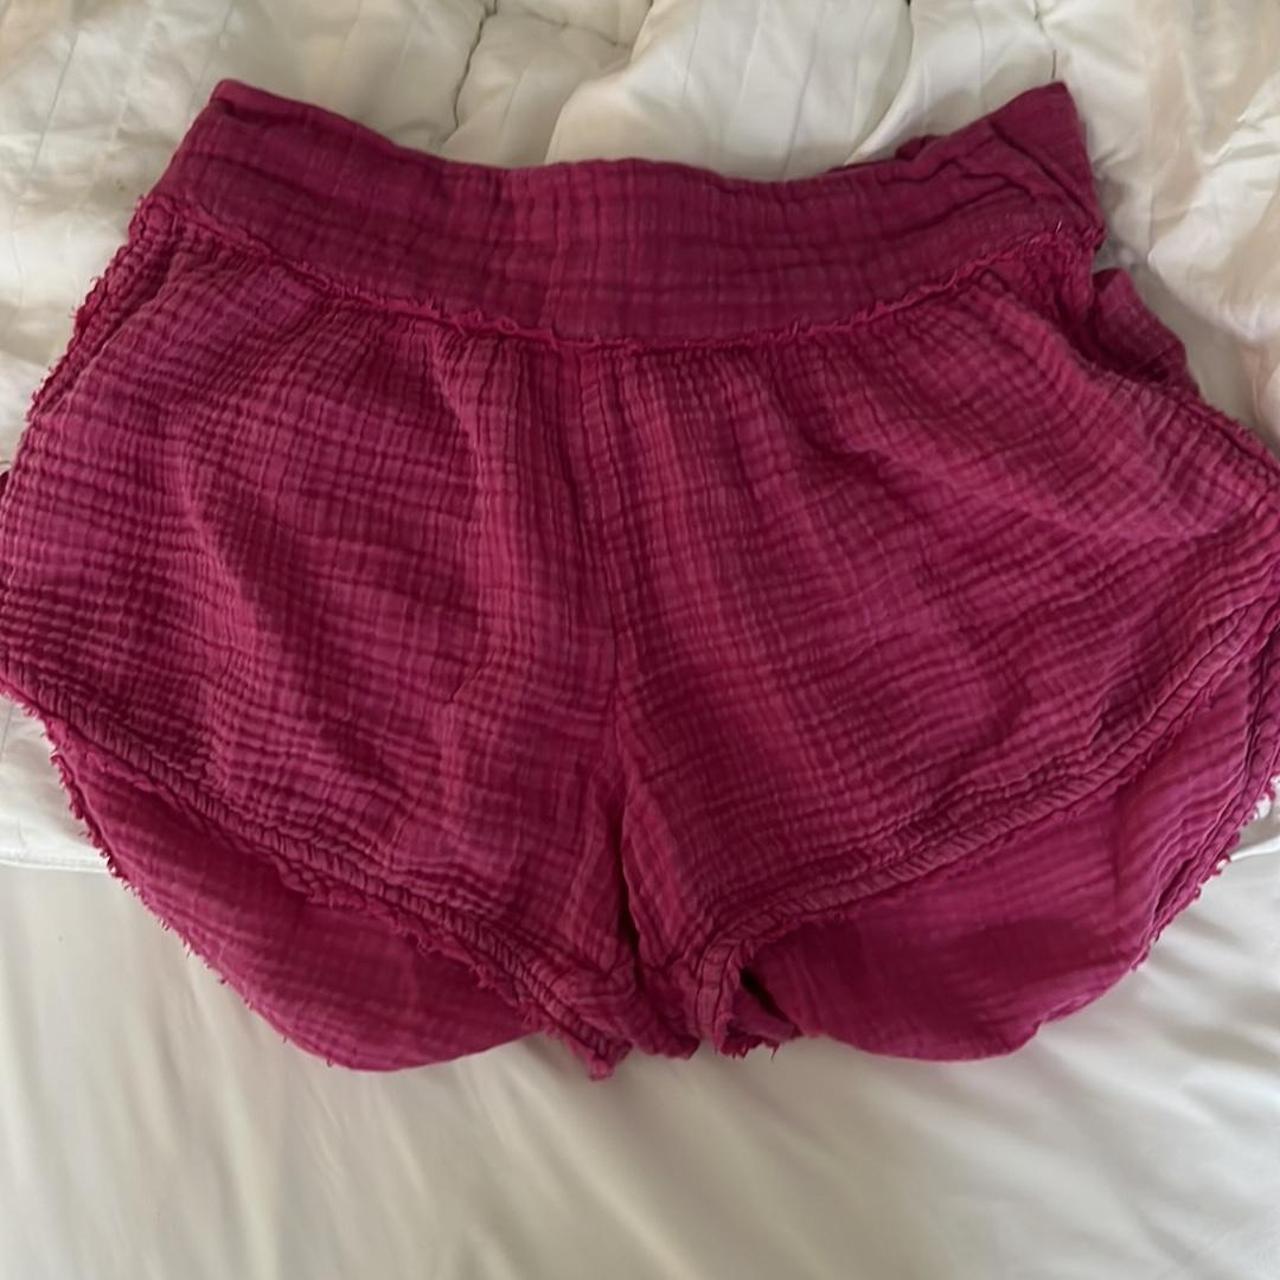 Anthropologie Women's Pink Shorts | Depop